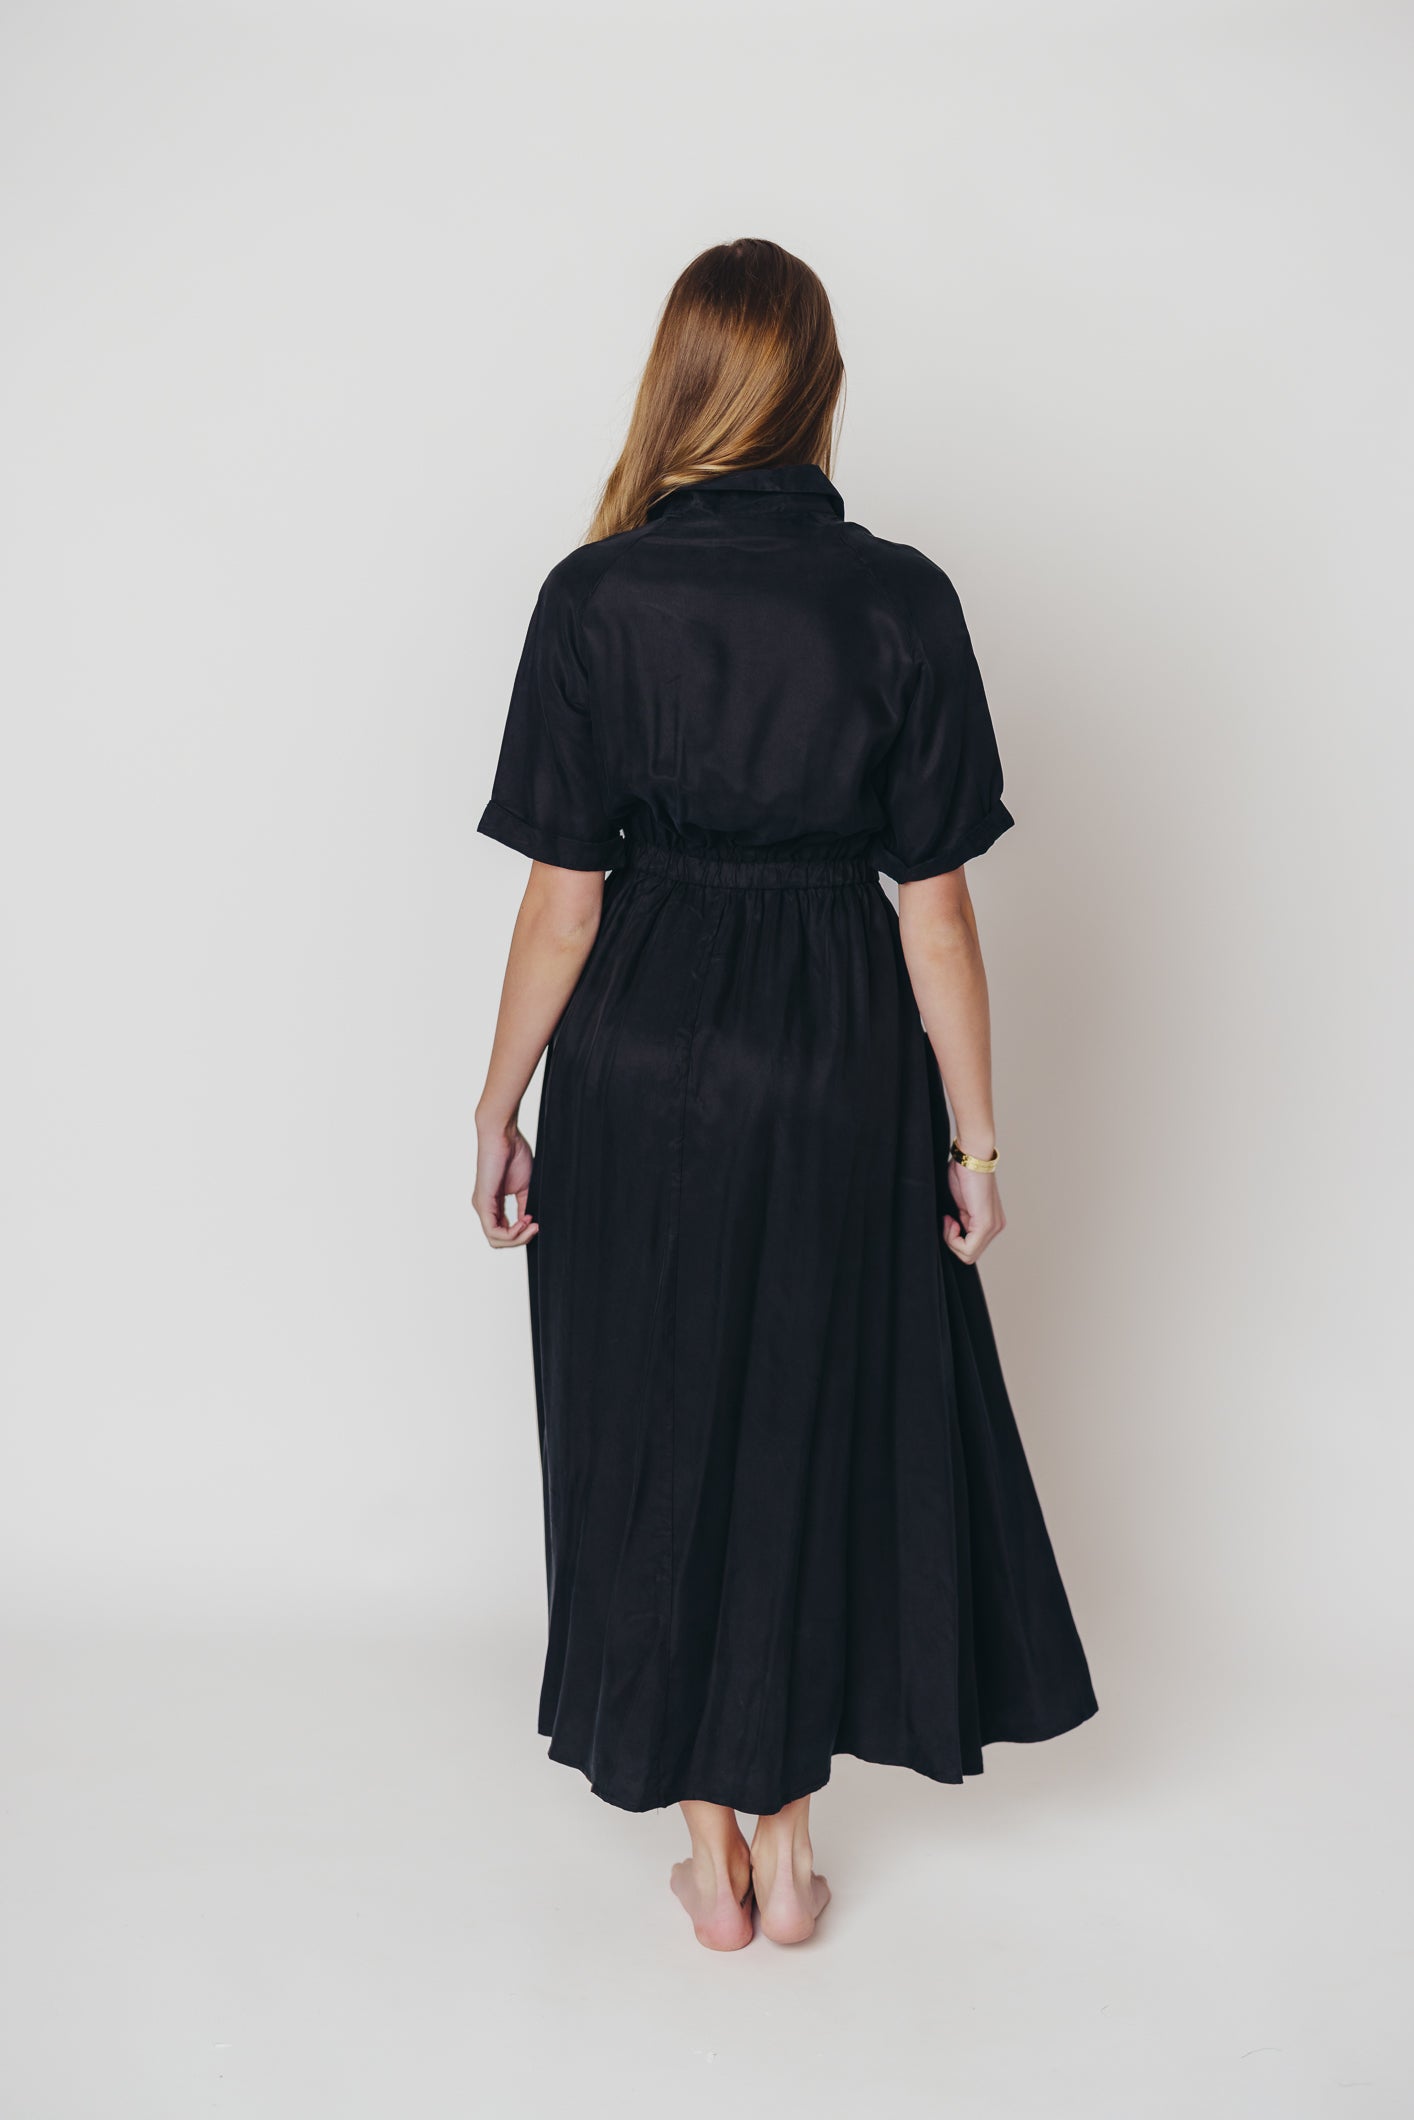 Alexis Viscose Maxi Shirt Dress in Black - Nursing Friendly